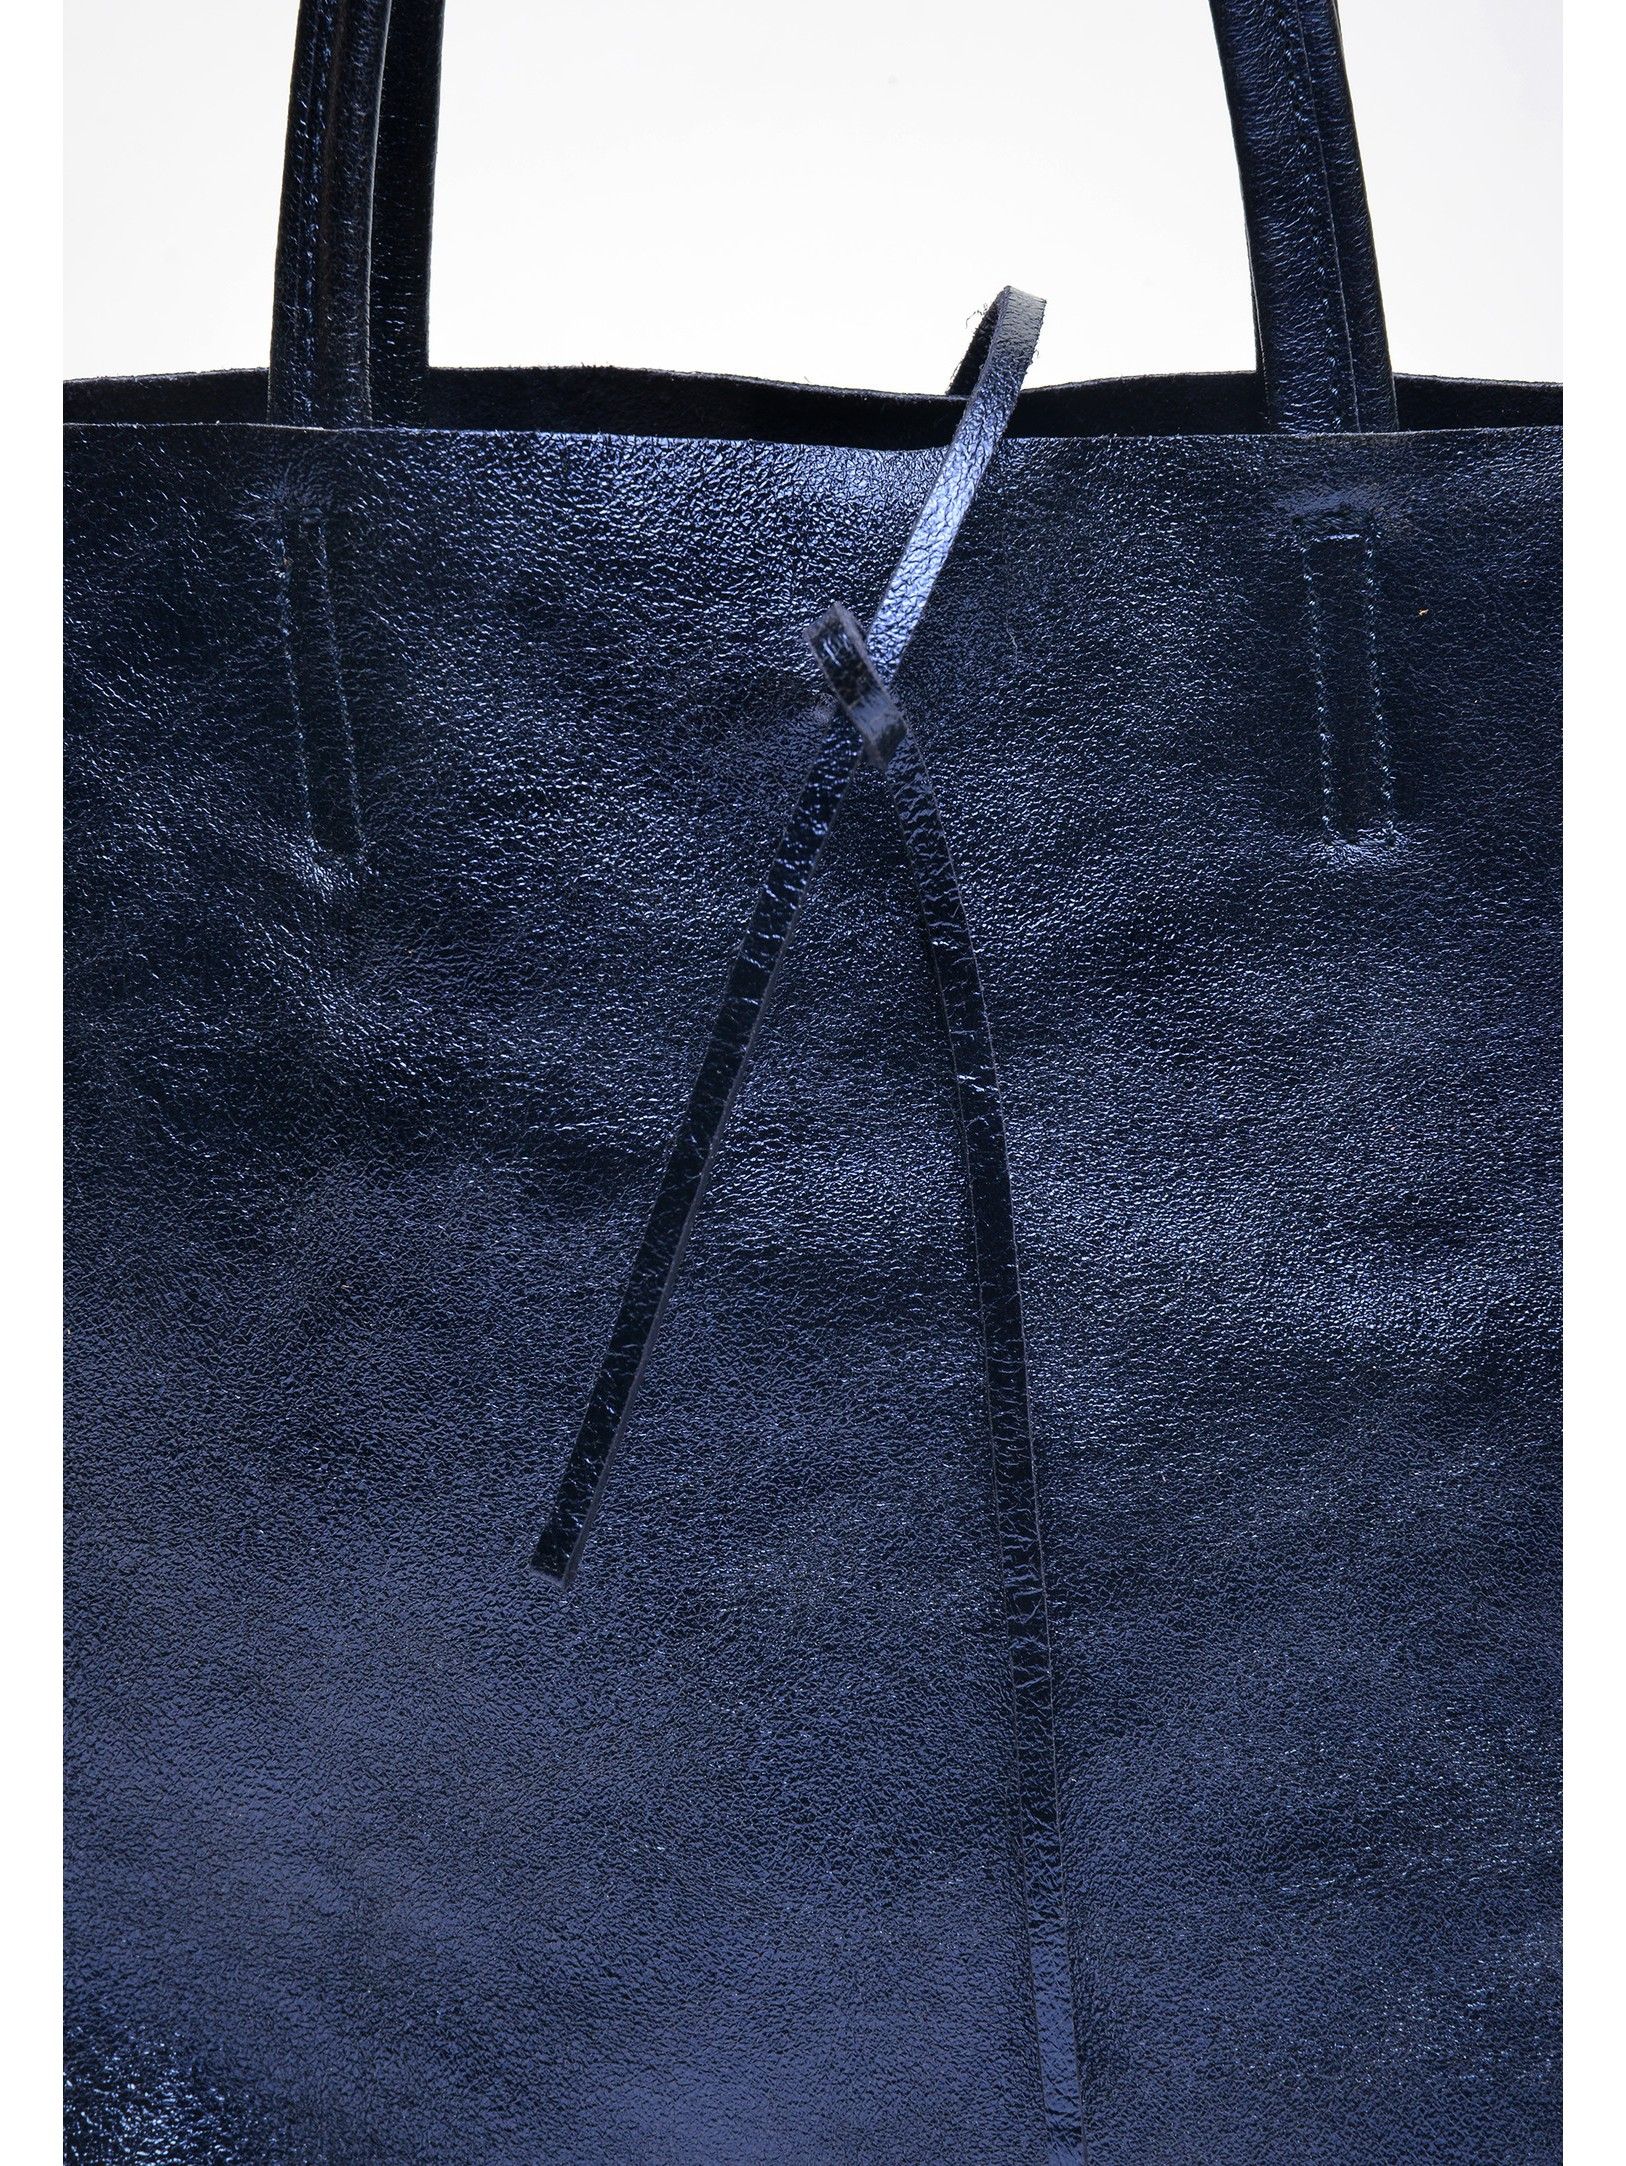 Shopper Bag
100% cow leather
Two top handles
Interior pocket
Dimensions(L): 37x41x12 cm